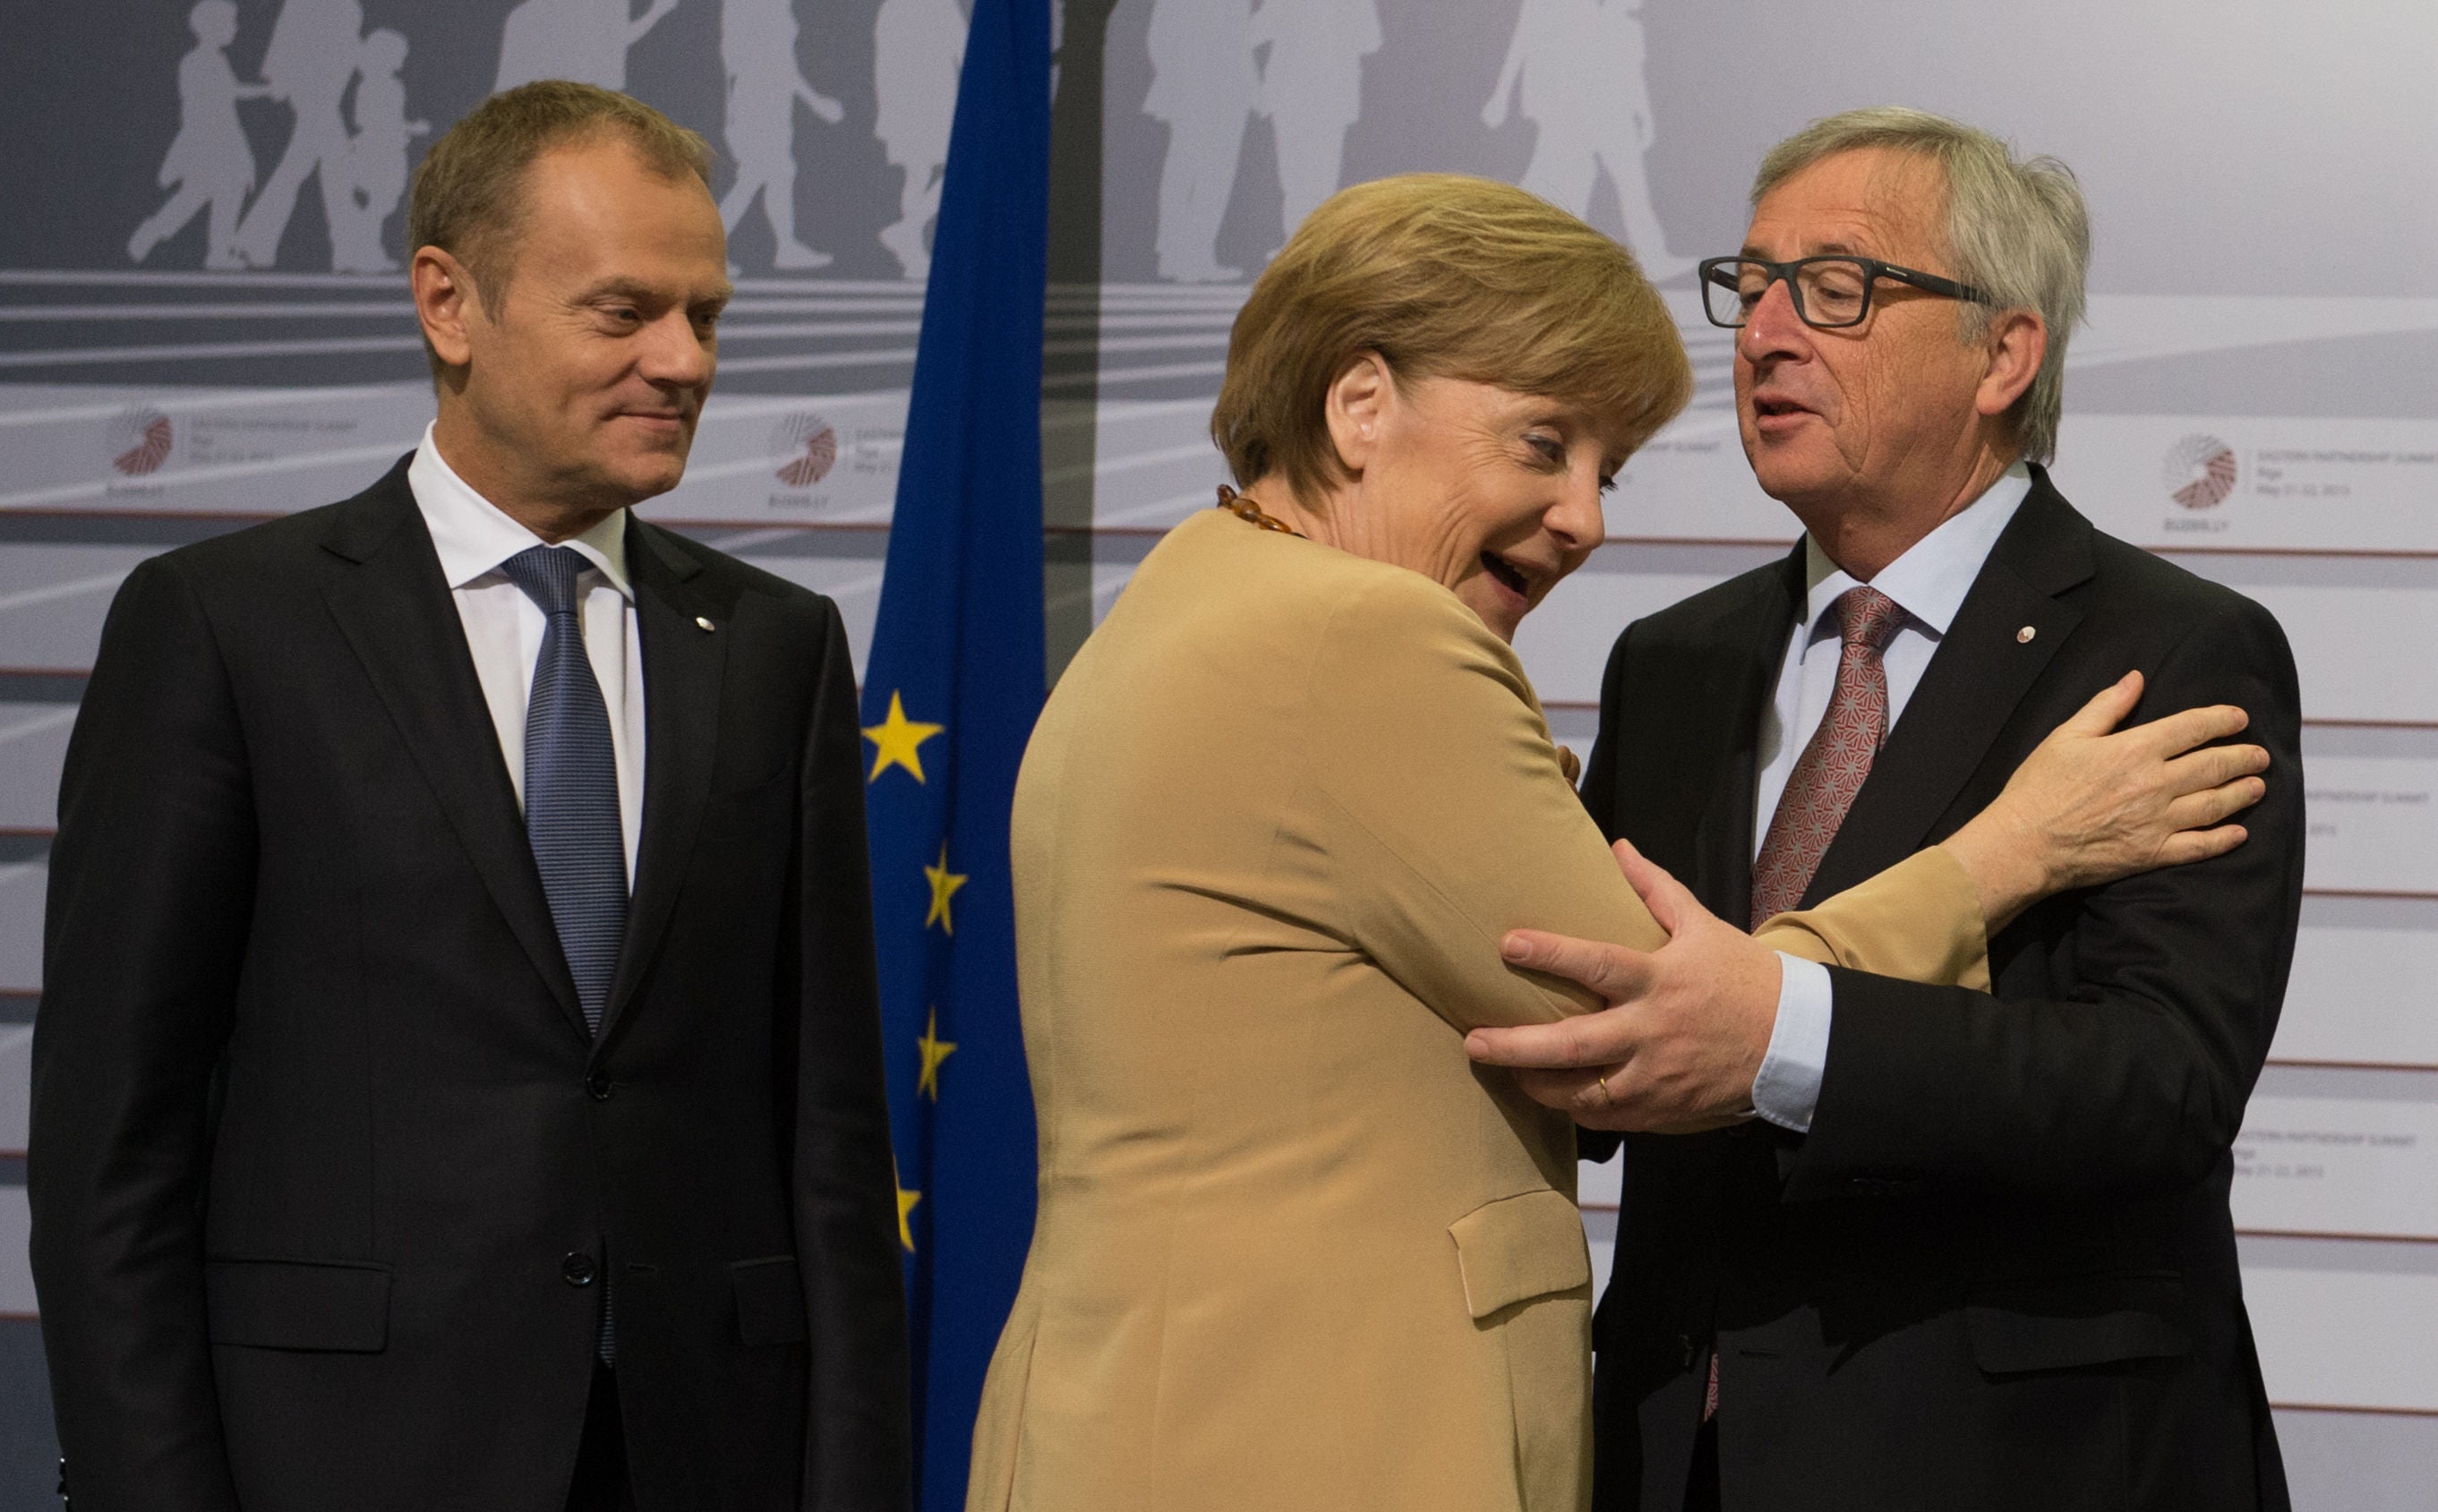 Angela Merkel hugs Jean-Claude Juncker, the EU Commission President, as European Council president Donald Tusk looks on (PA)